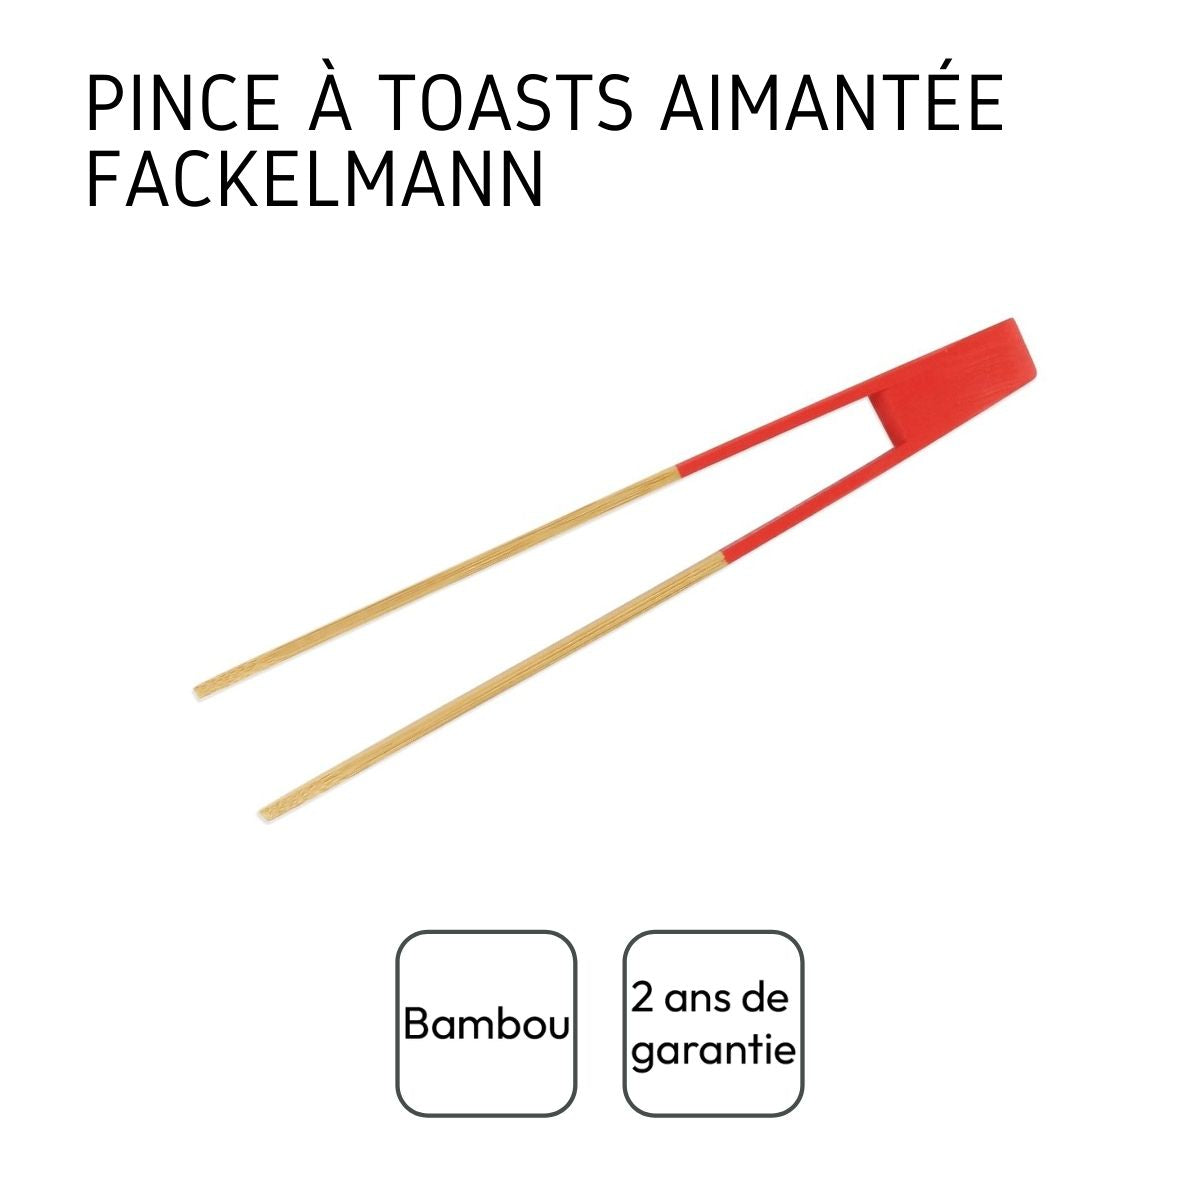 Pince de cuisine aimantée en bois Fackelmann Wood Edition